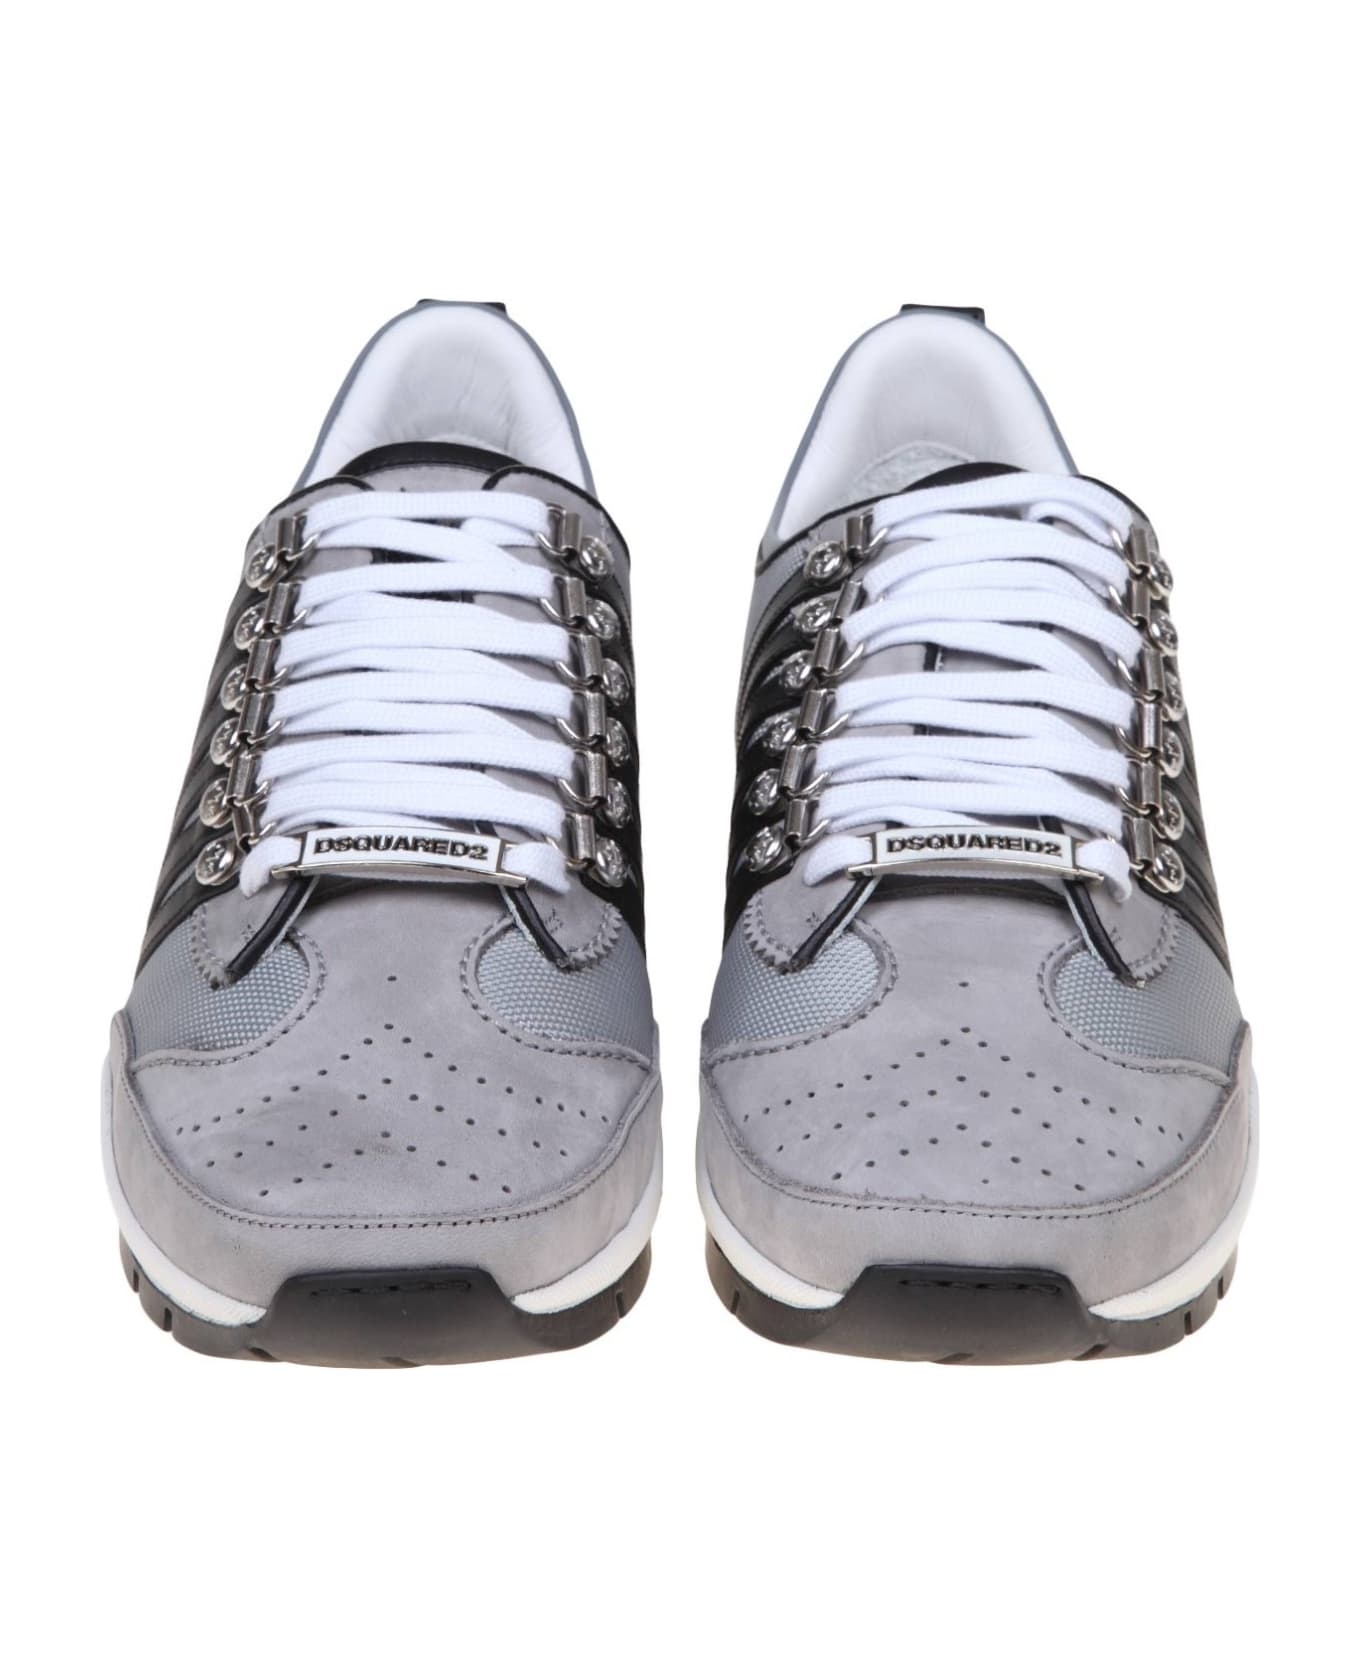 Dsquared2 Legendary Sneakers - Gray / Black